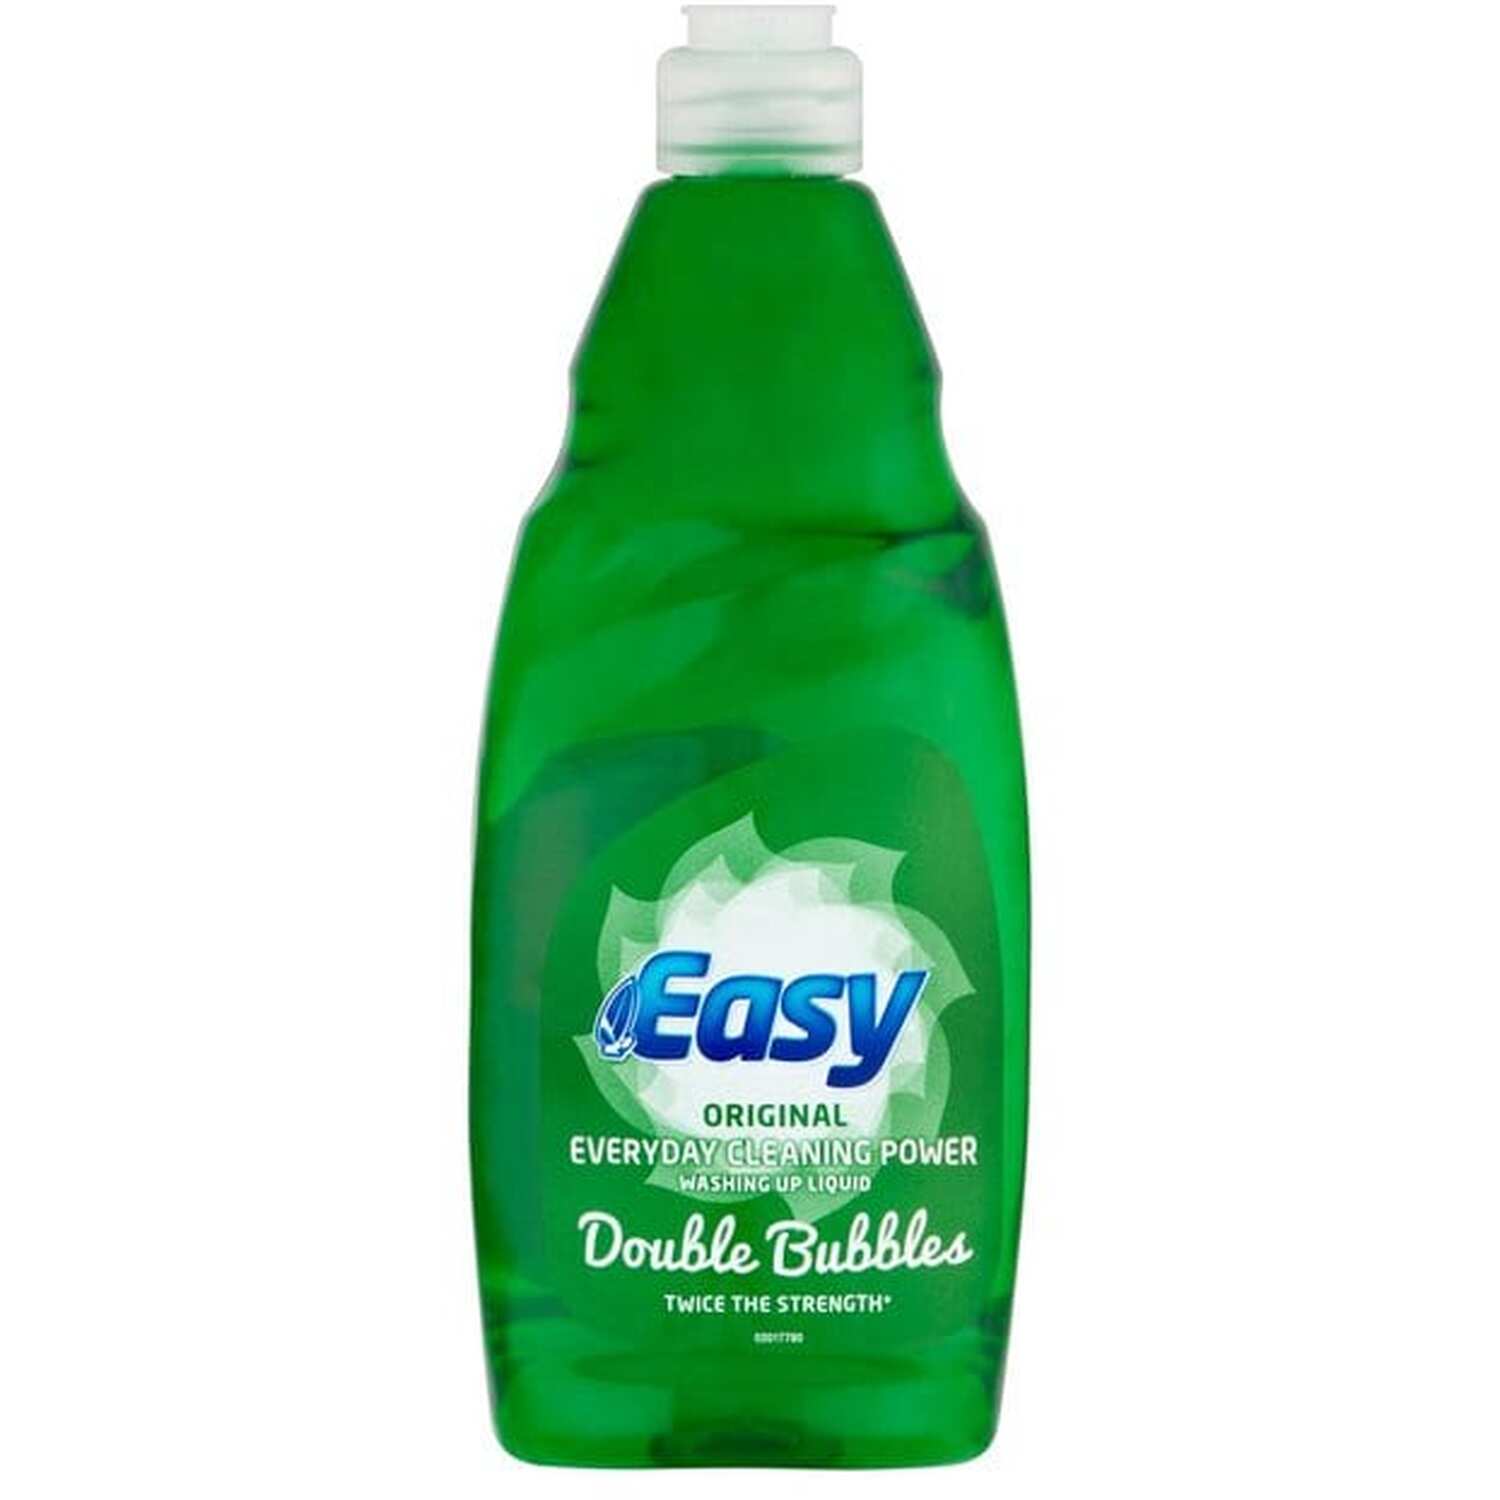 Easy Double Bubbles Washing Up Liquid - 1l / Original Image 1